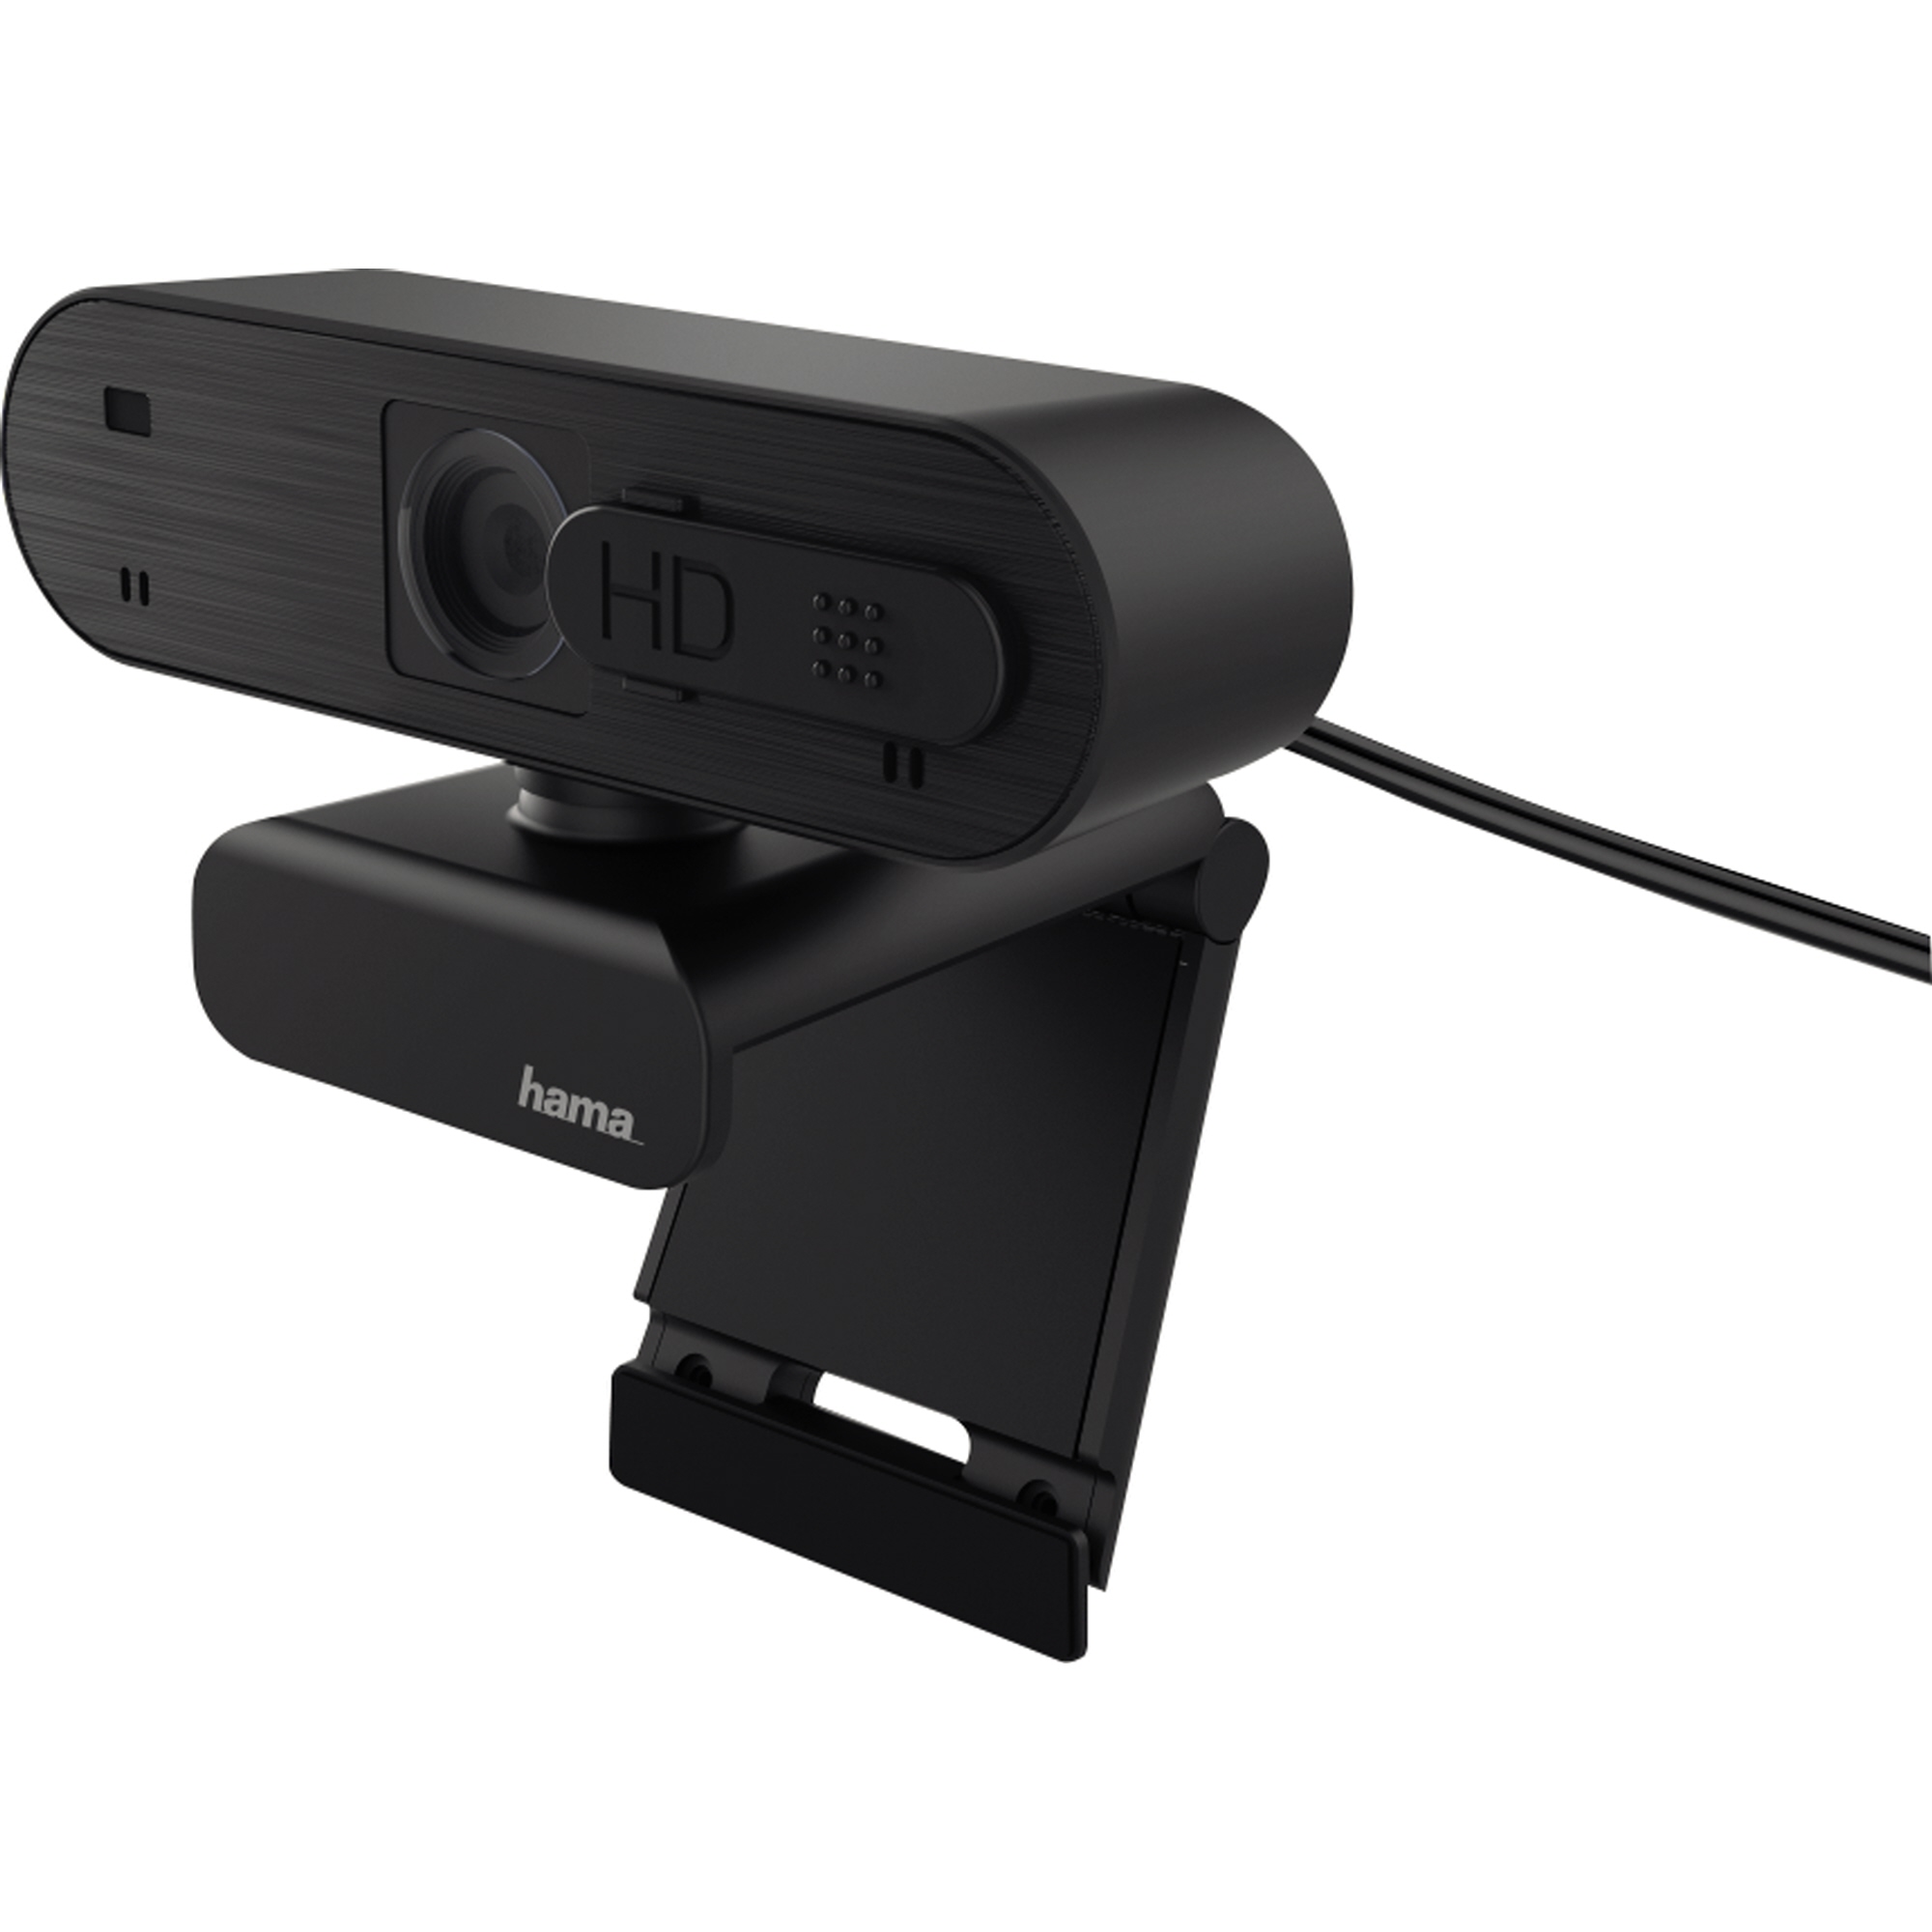 Hama Webcam C-600 Pro Full-HD USB 2.0 schwarz